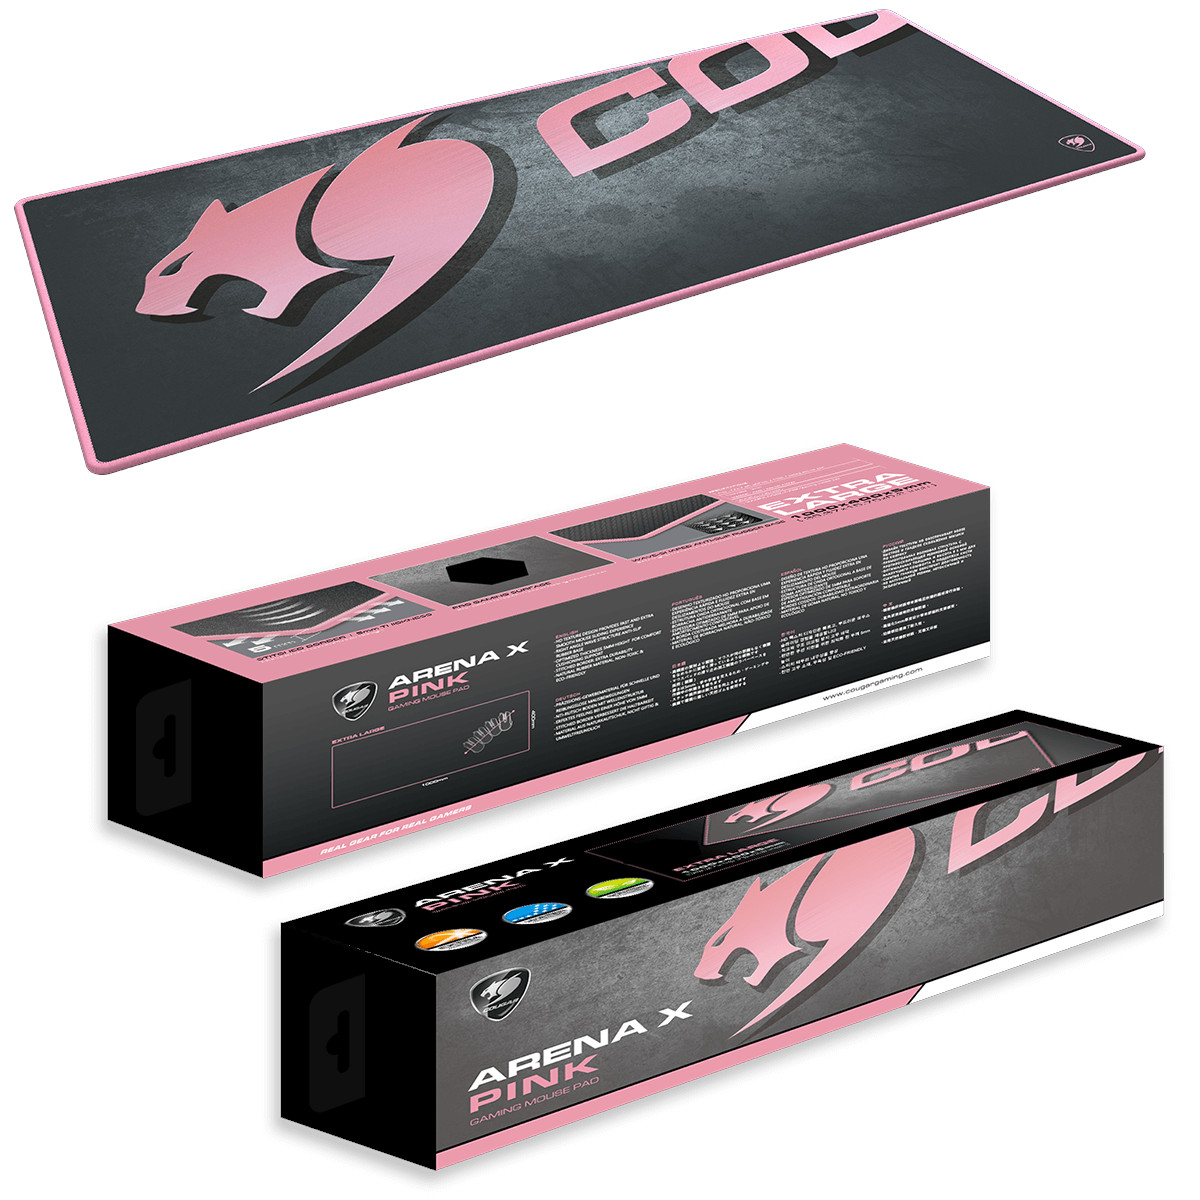 Cougar - Arena-X-Pink -   